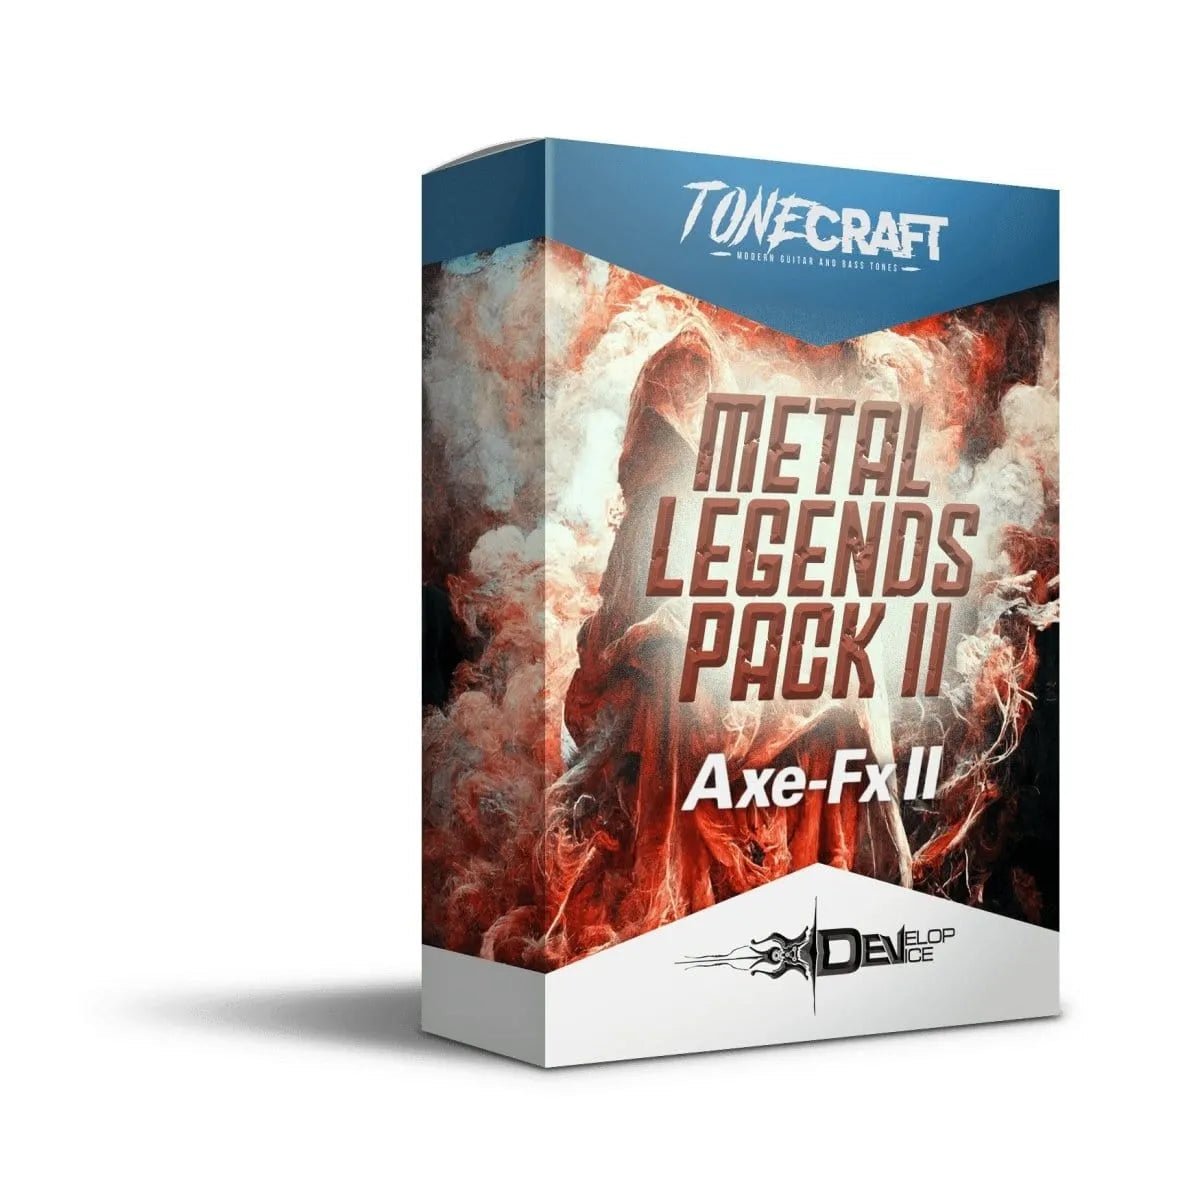 Metal Legends Pack II for Fractal Axe-Fx II - Fractal Axe Fx II Presets by Develop Device